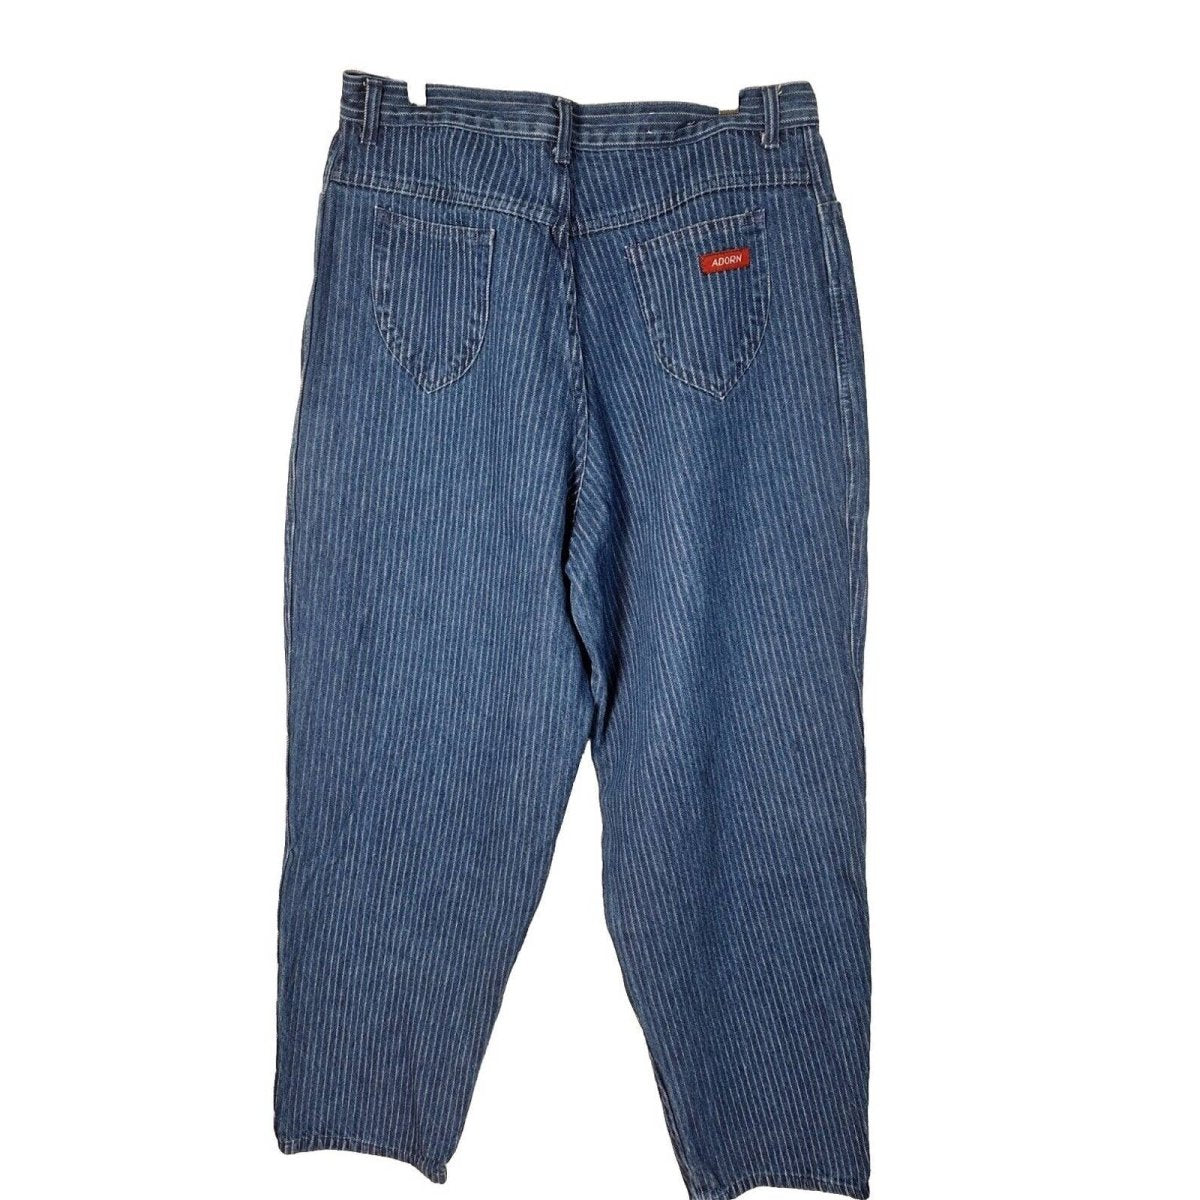 Vintage 80s All Cotton Dark Wash Railroad Stripe Jeans Unisex Size 36x32 - themallvintage The Mall Vintage